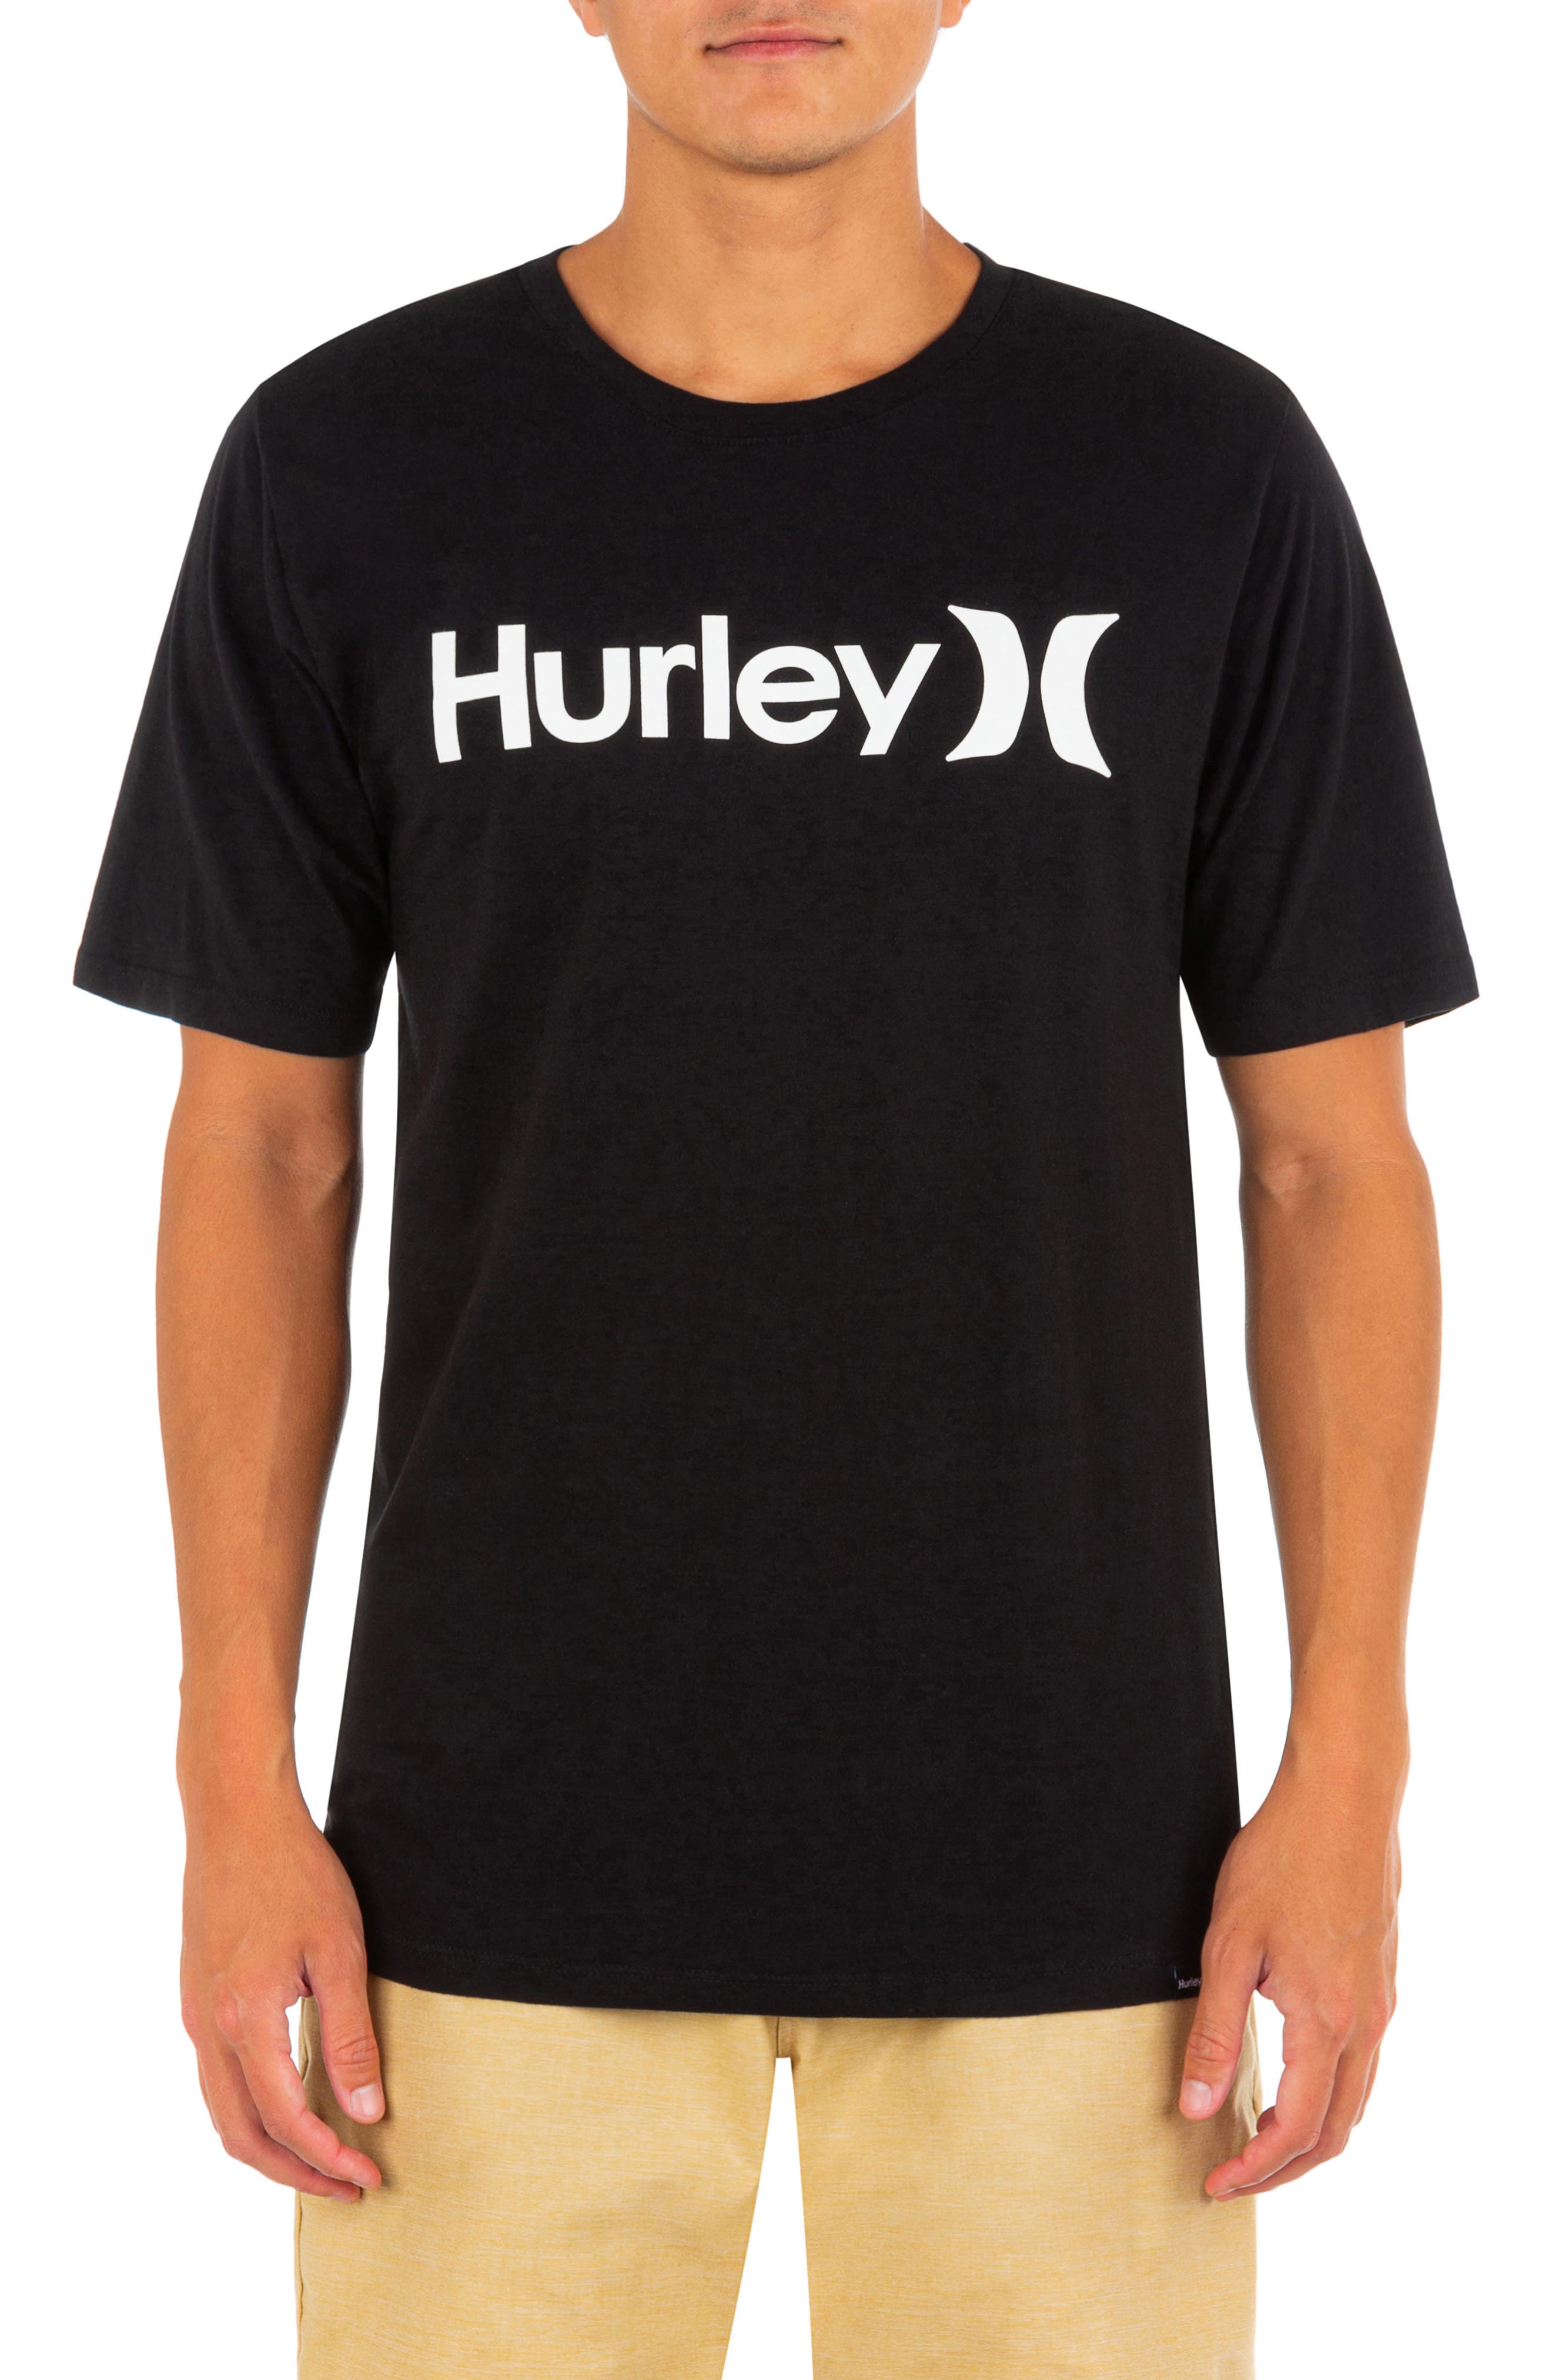 Boy's Little Youth Hurley Modern Fit Premium Tee T-Shirt 